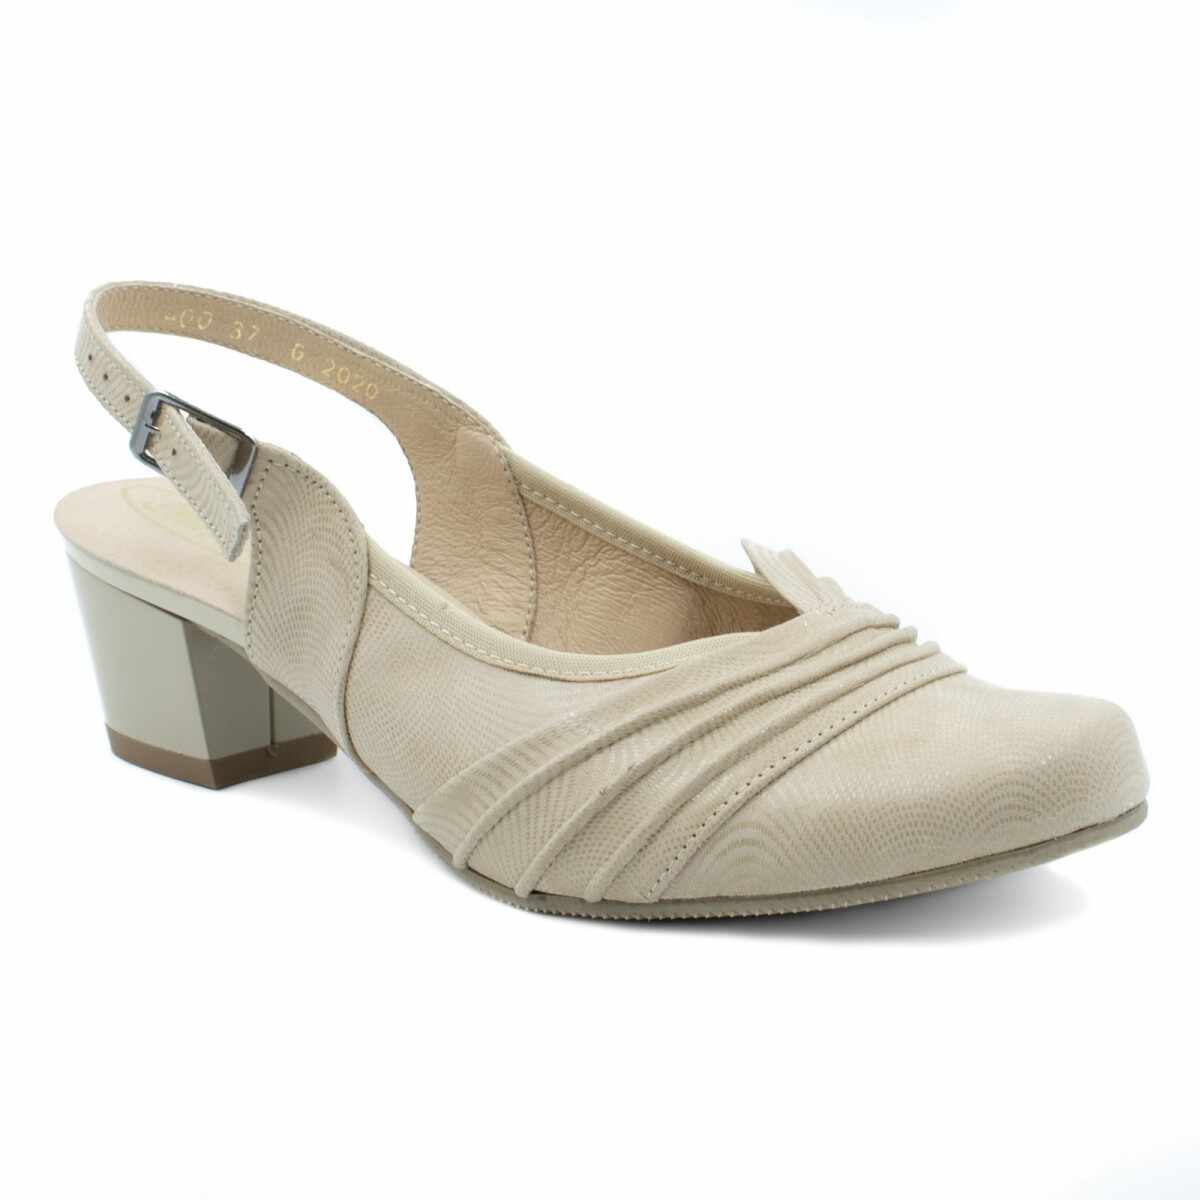 Pantofi vara dama confort, Beatrixx, din piele naturala imprimata, culoare bej, cod L-400